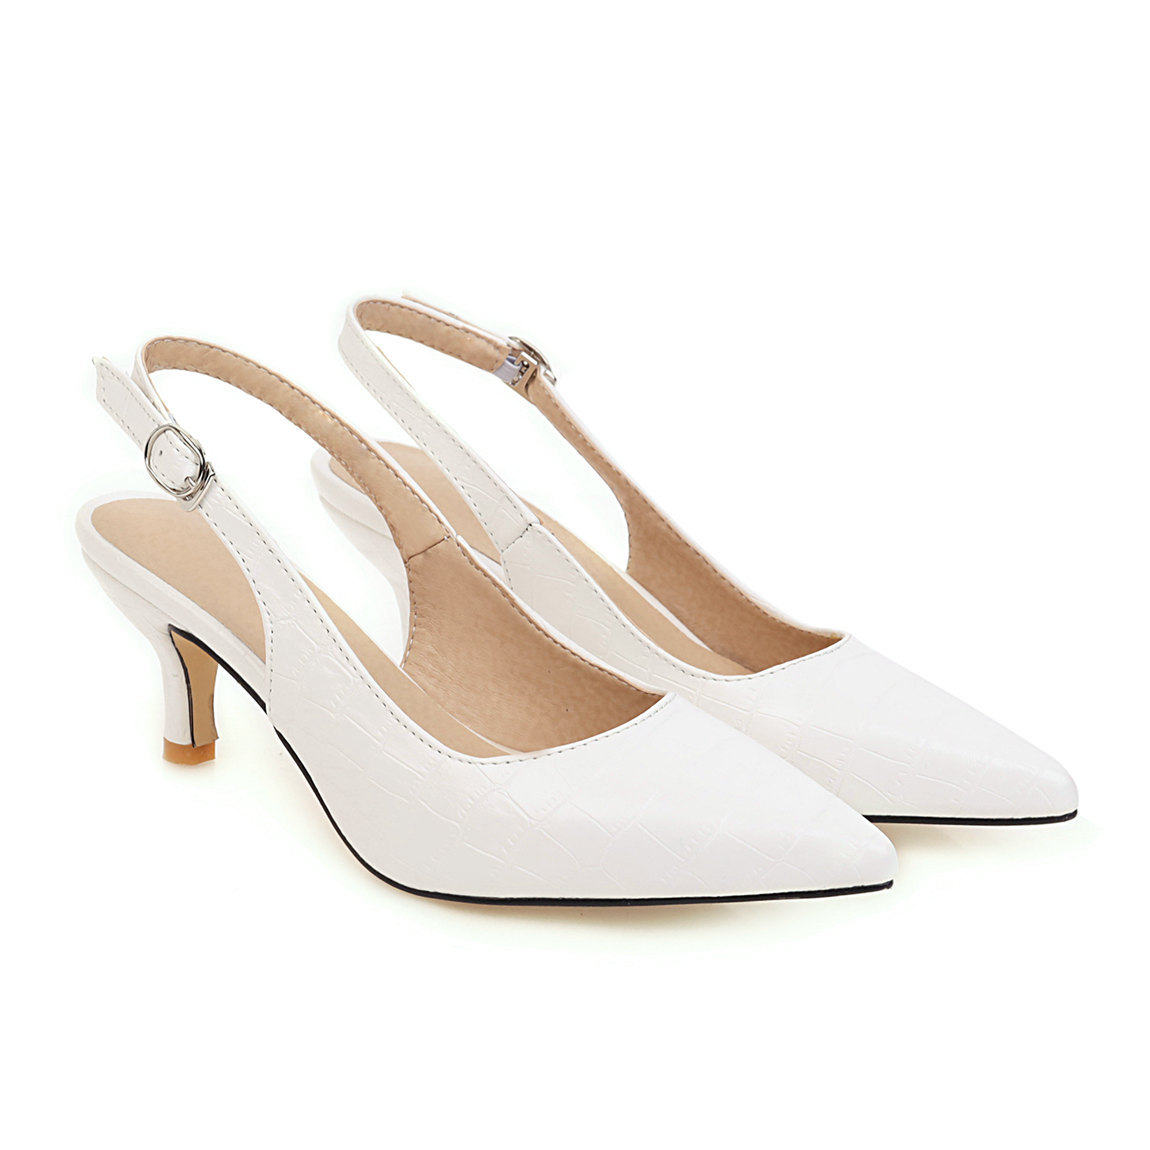 Nicole Hoyt Women's Step 'N Flex Babbsy Pointed-Toe Slingback Pumps Shoes WHITE CROC